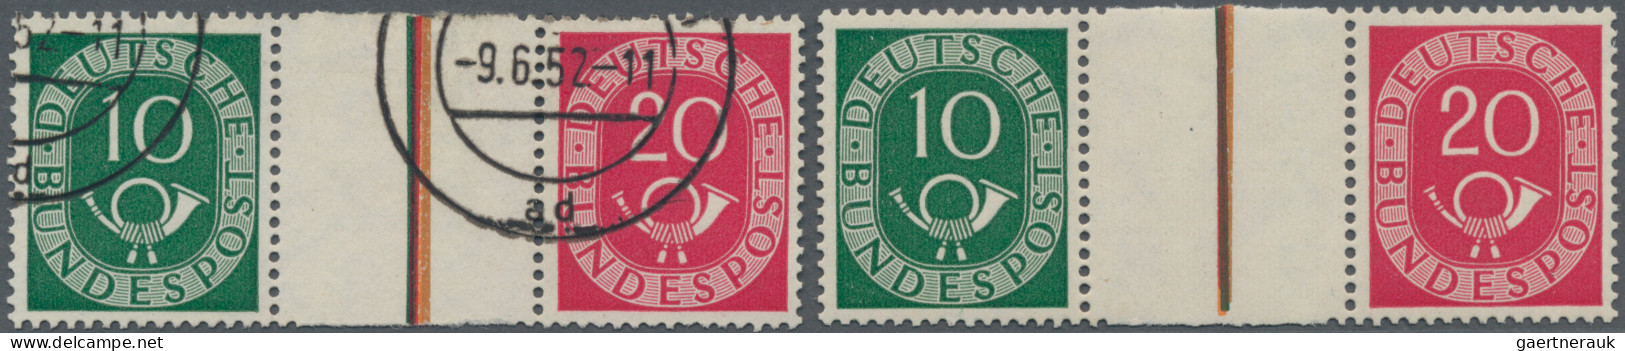 Bundesrepublik - Zusammendrucke: 1951, Posthorn 10+Z+20 (Pf), Zusammendruck Post - Zusammendrucke